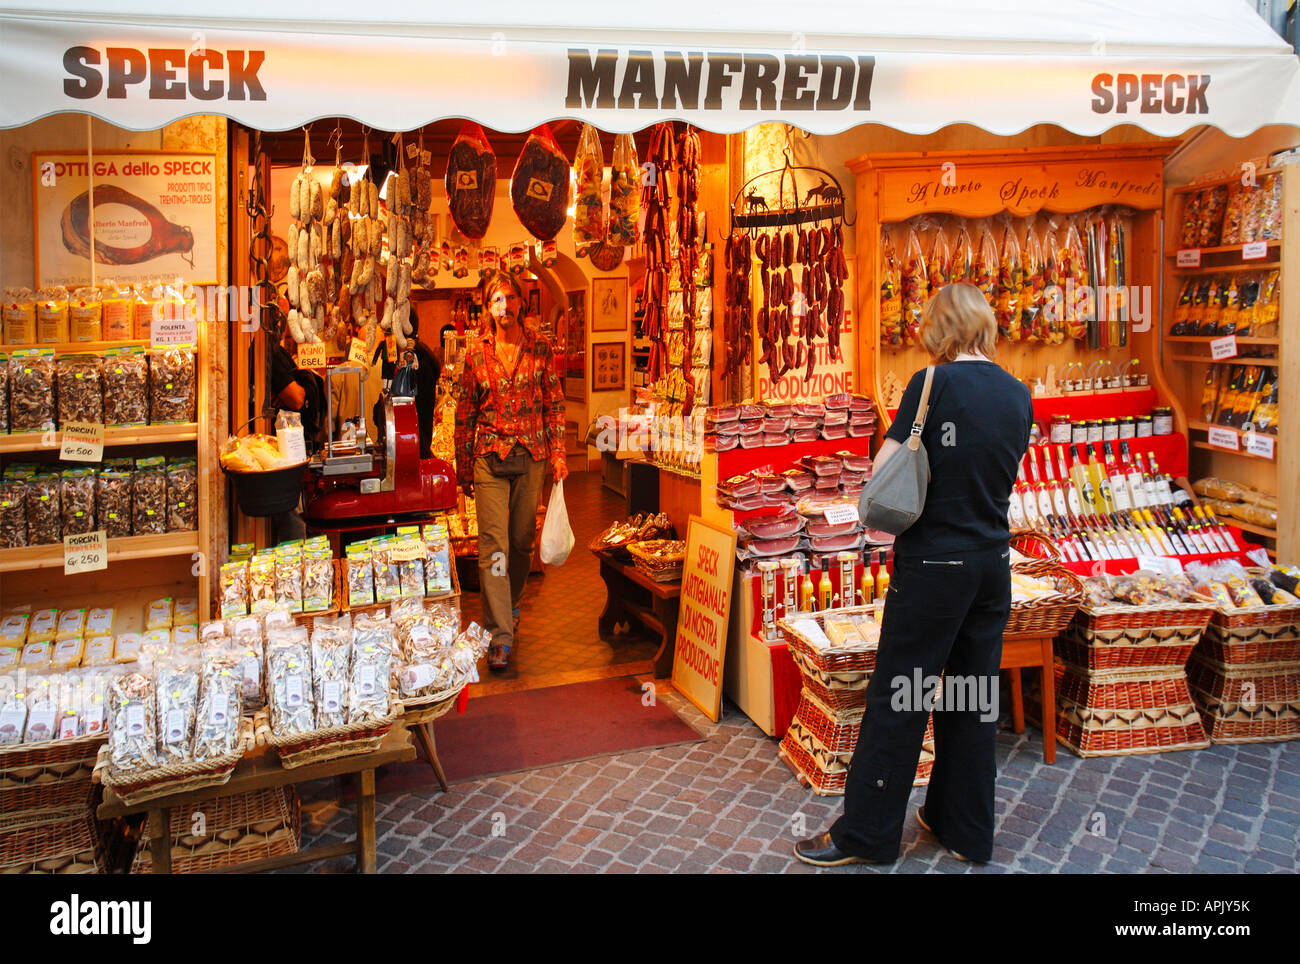 Bottega della Speck shop, Levico Terme, Alto Adige Südtirol region, Italy  Stock Photo - Alamy